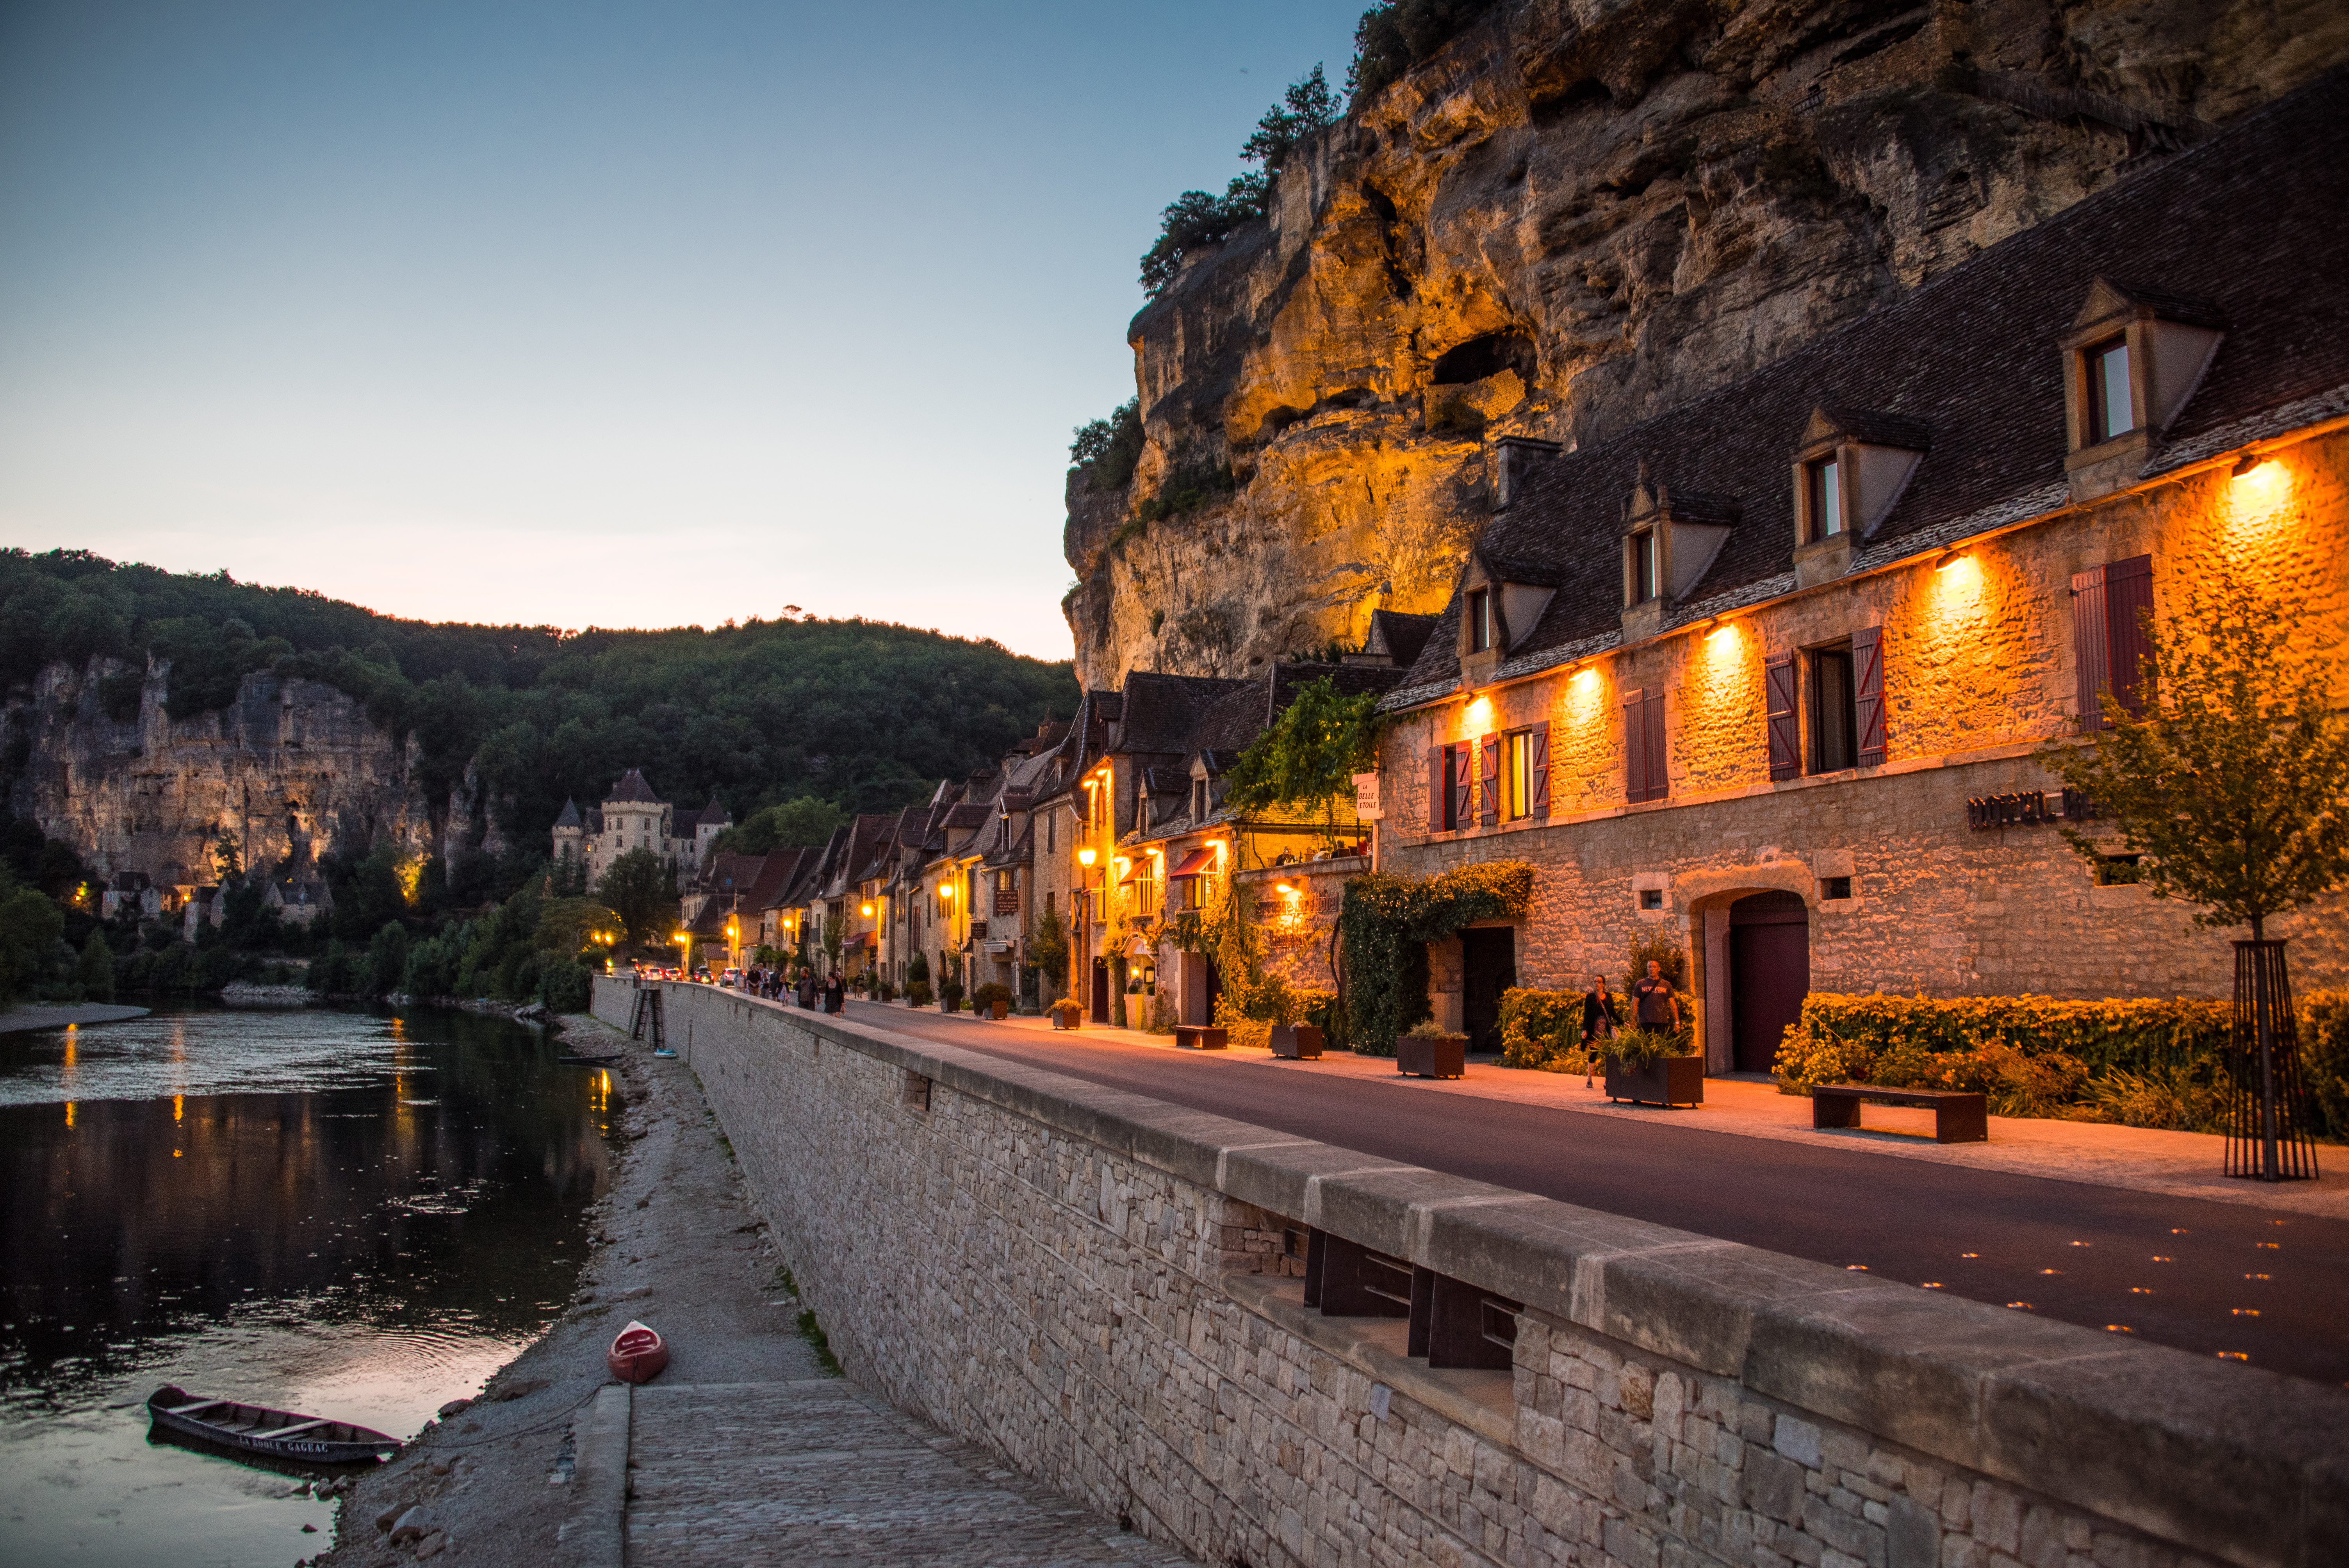 Town of La Roque Gageac, Dordogne (photo © Dan Courtice).